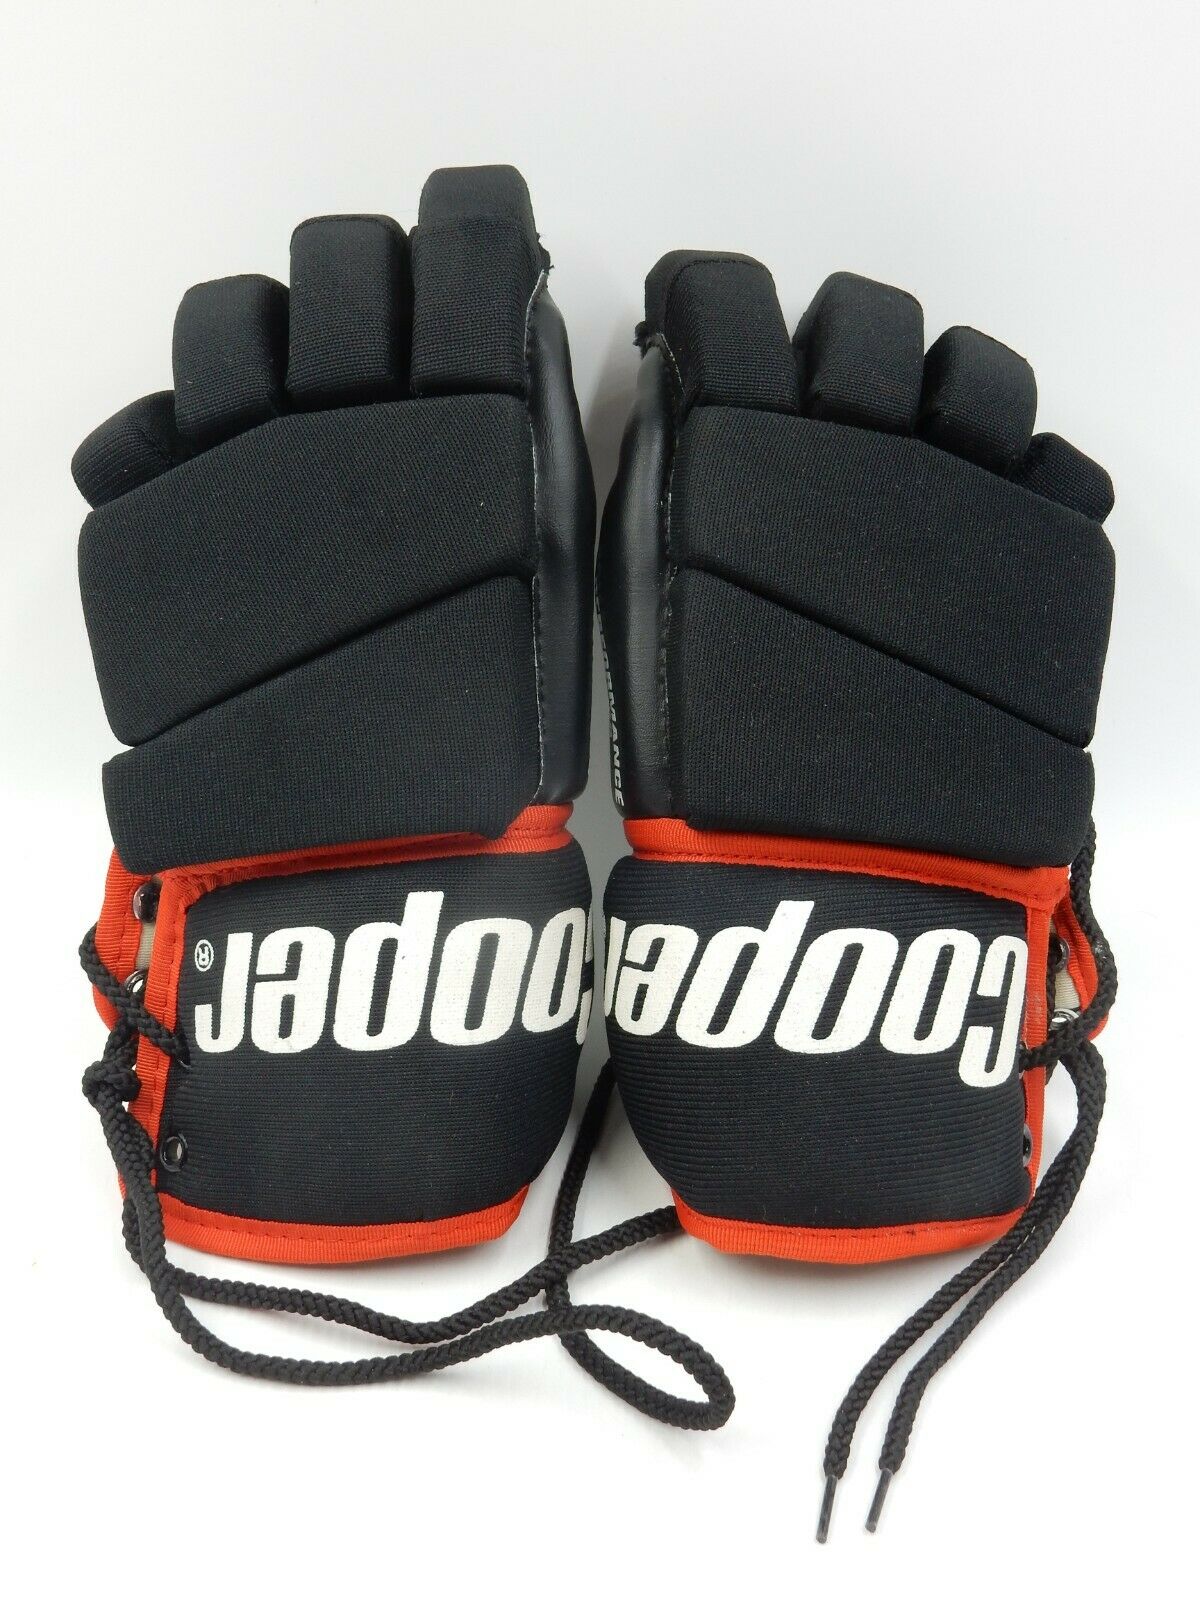 Nos Cooper Black & Red Performance Junior Ice Hockey Gloves ~ Marked Size "c"